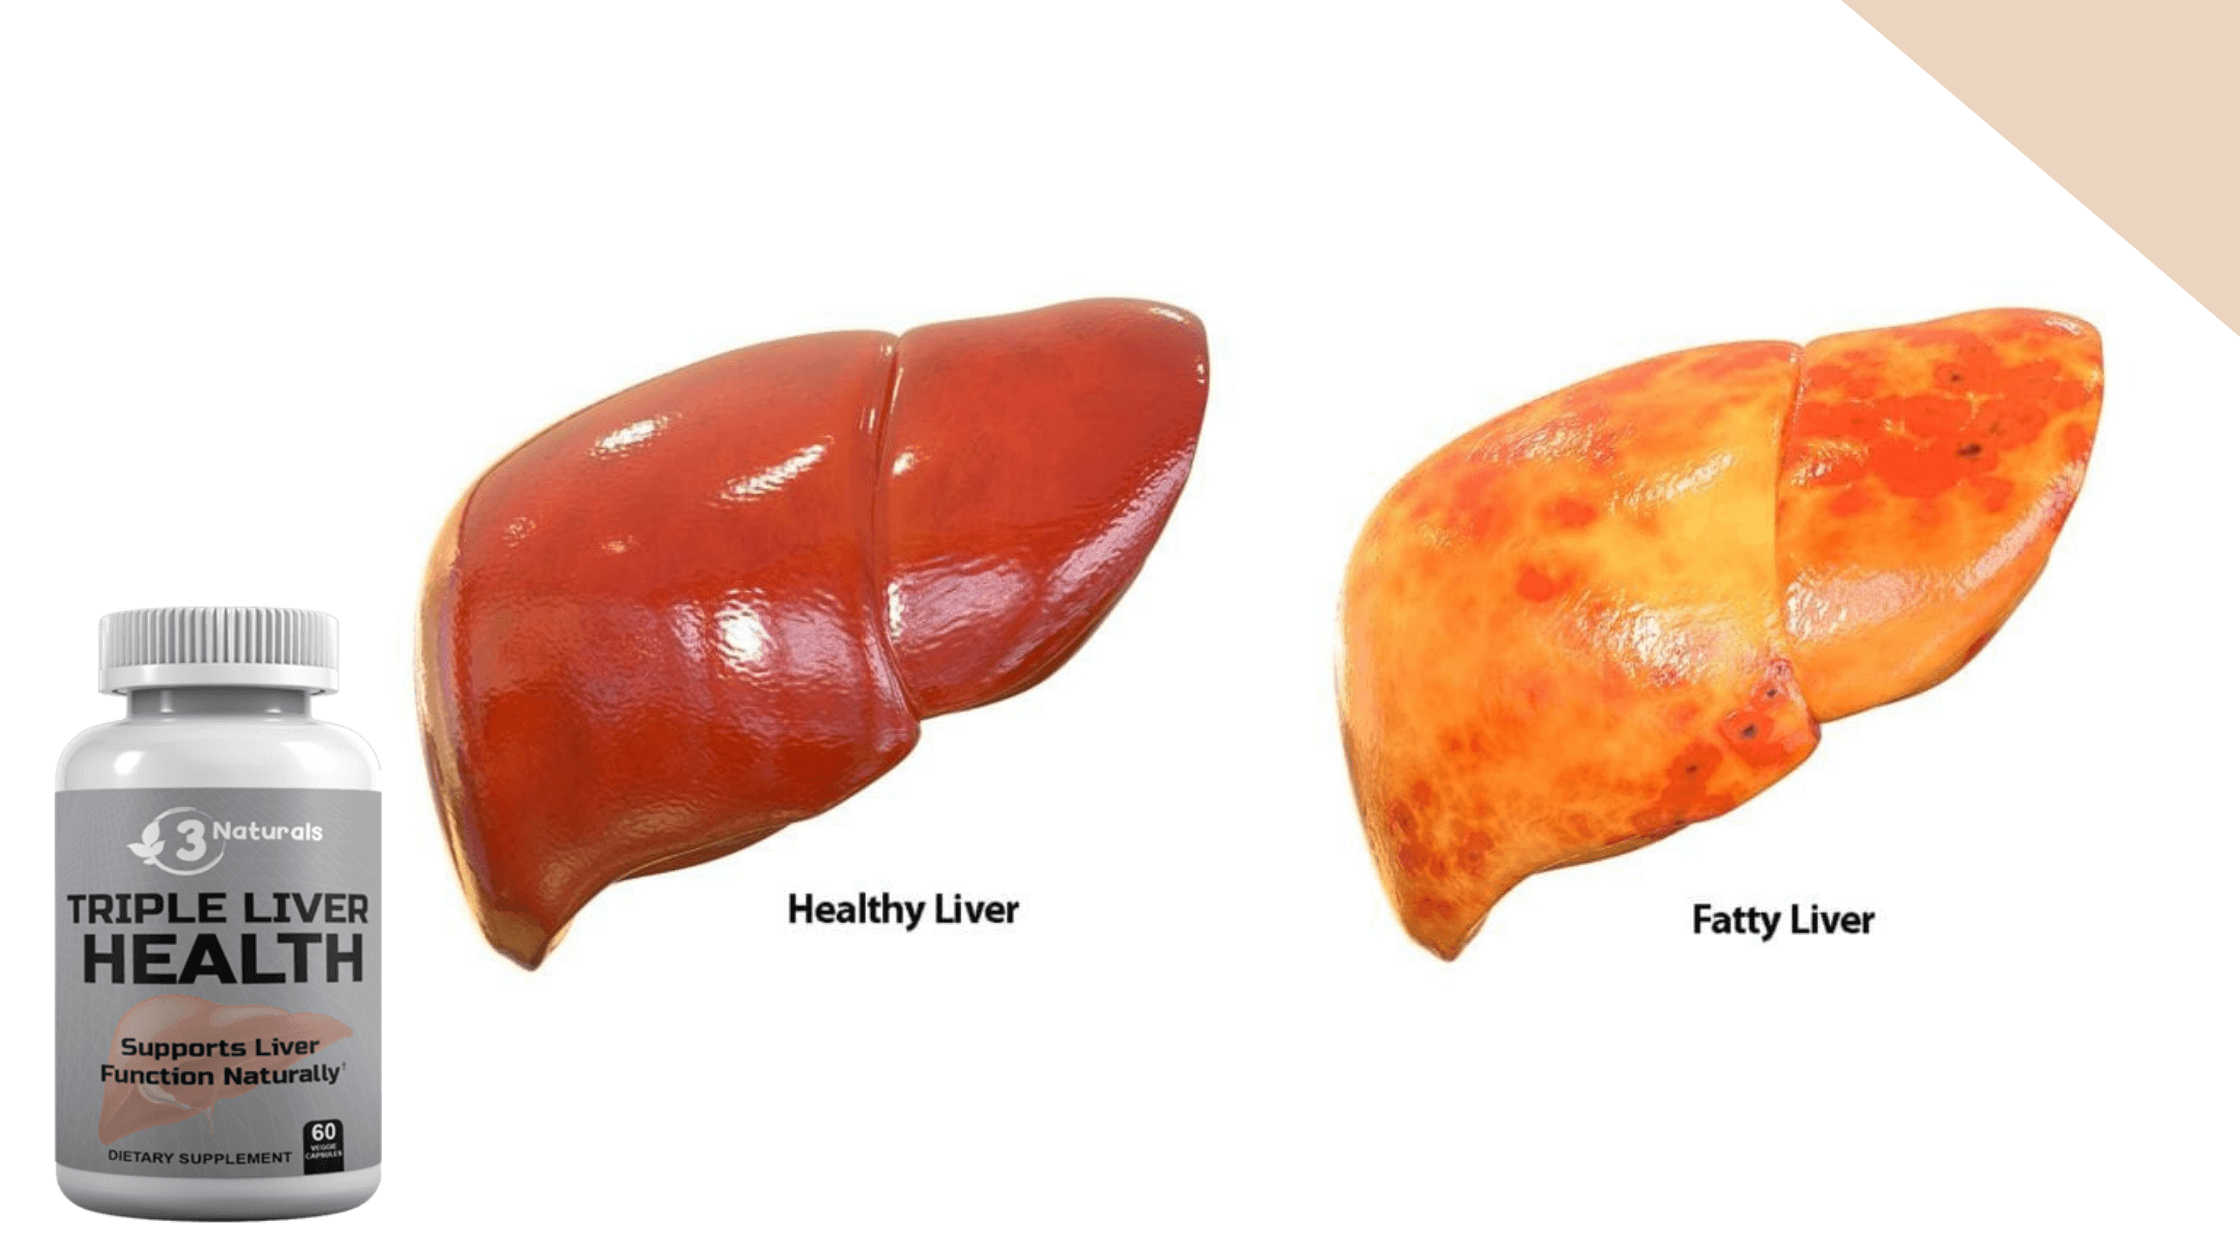 Triple Liver Health benefits